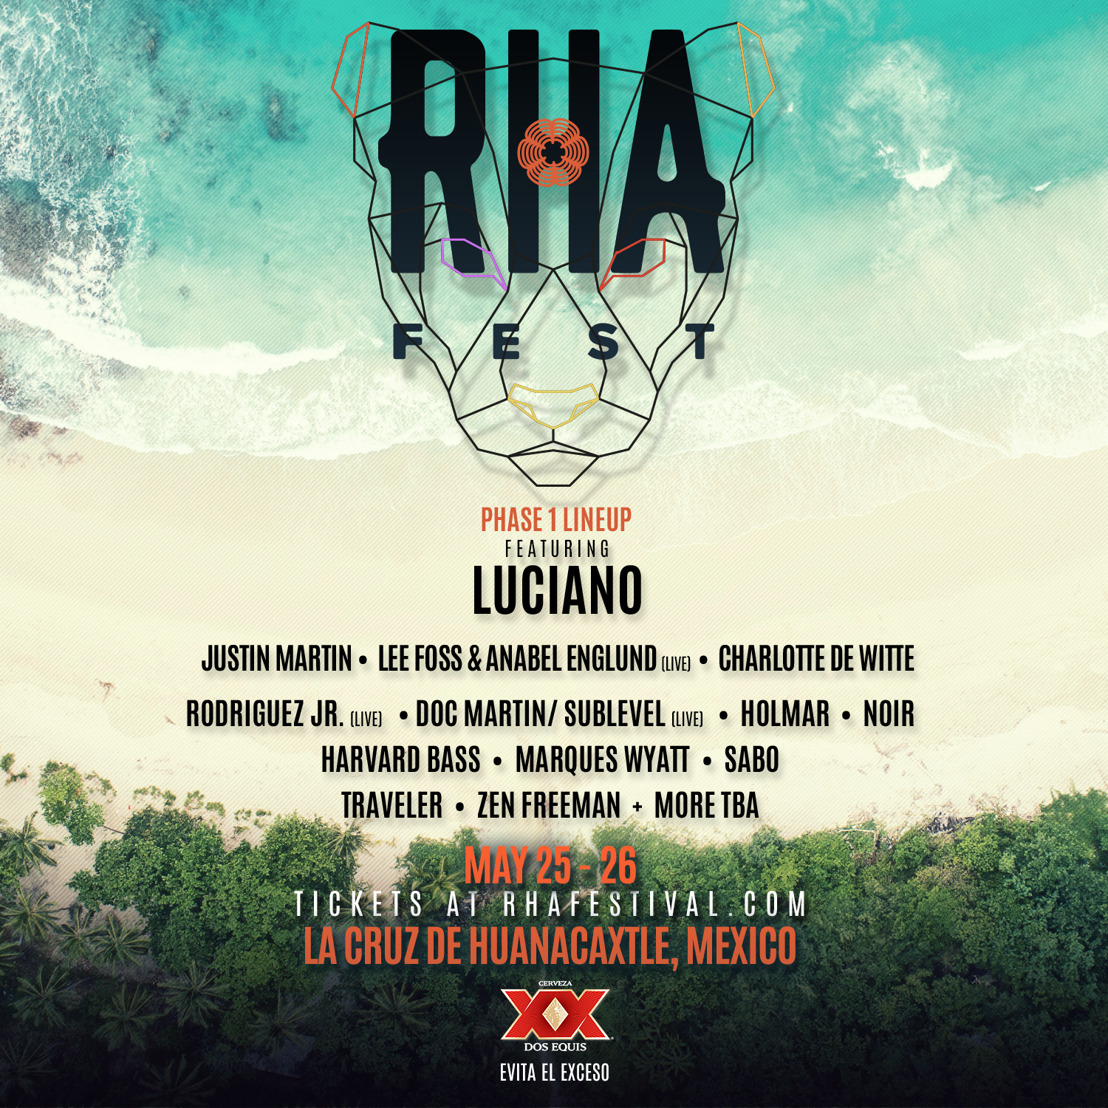 RHA Festival Returns to Mexicoâs Famed Coastal Resort Riviera Nayarit May 25-26, 2018